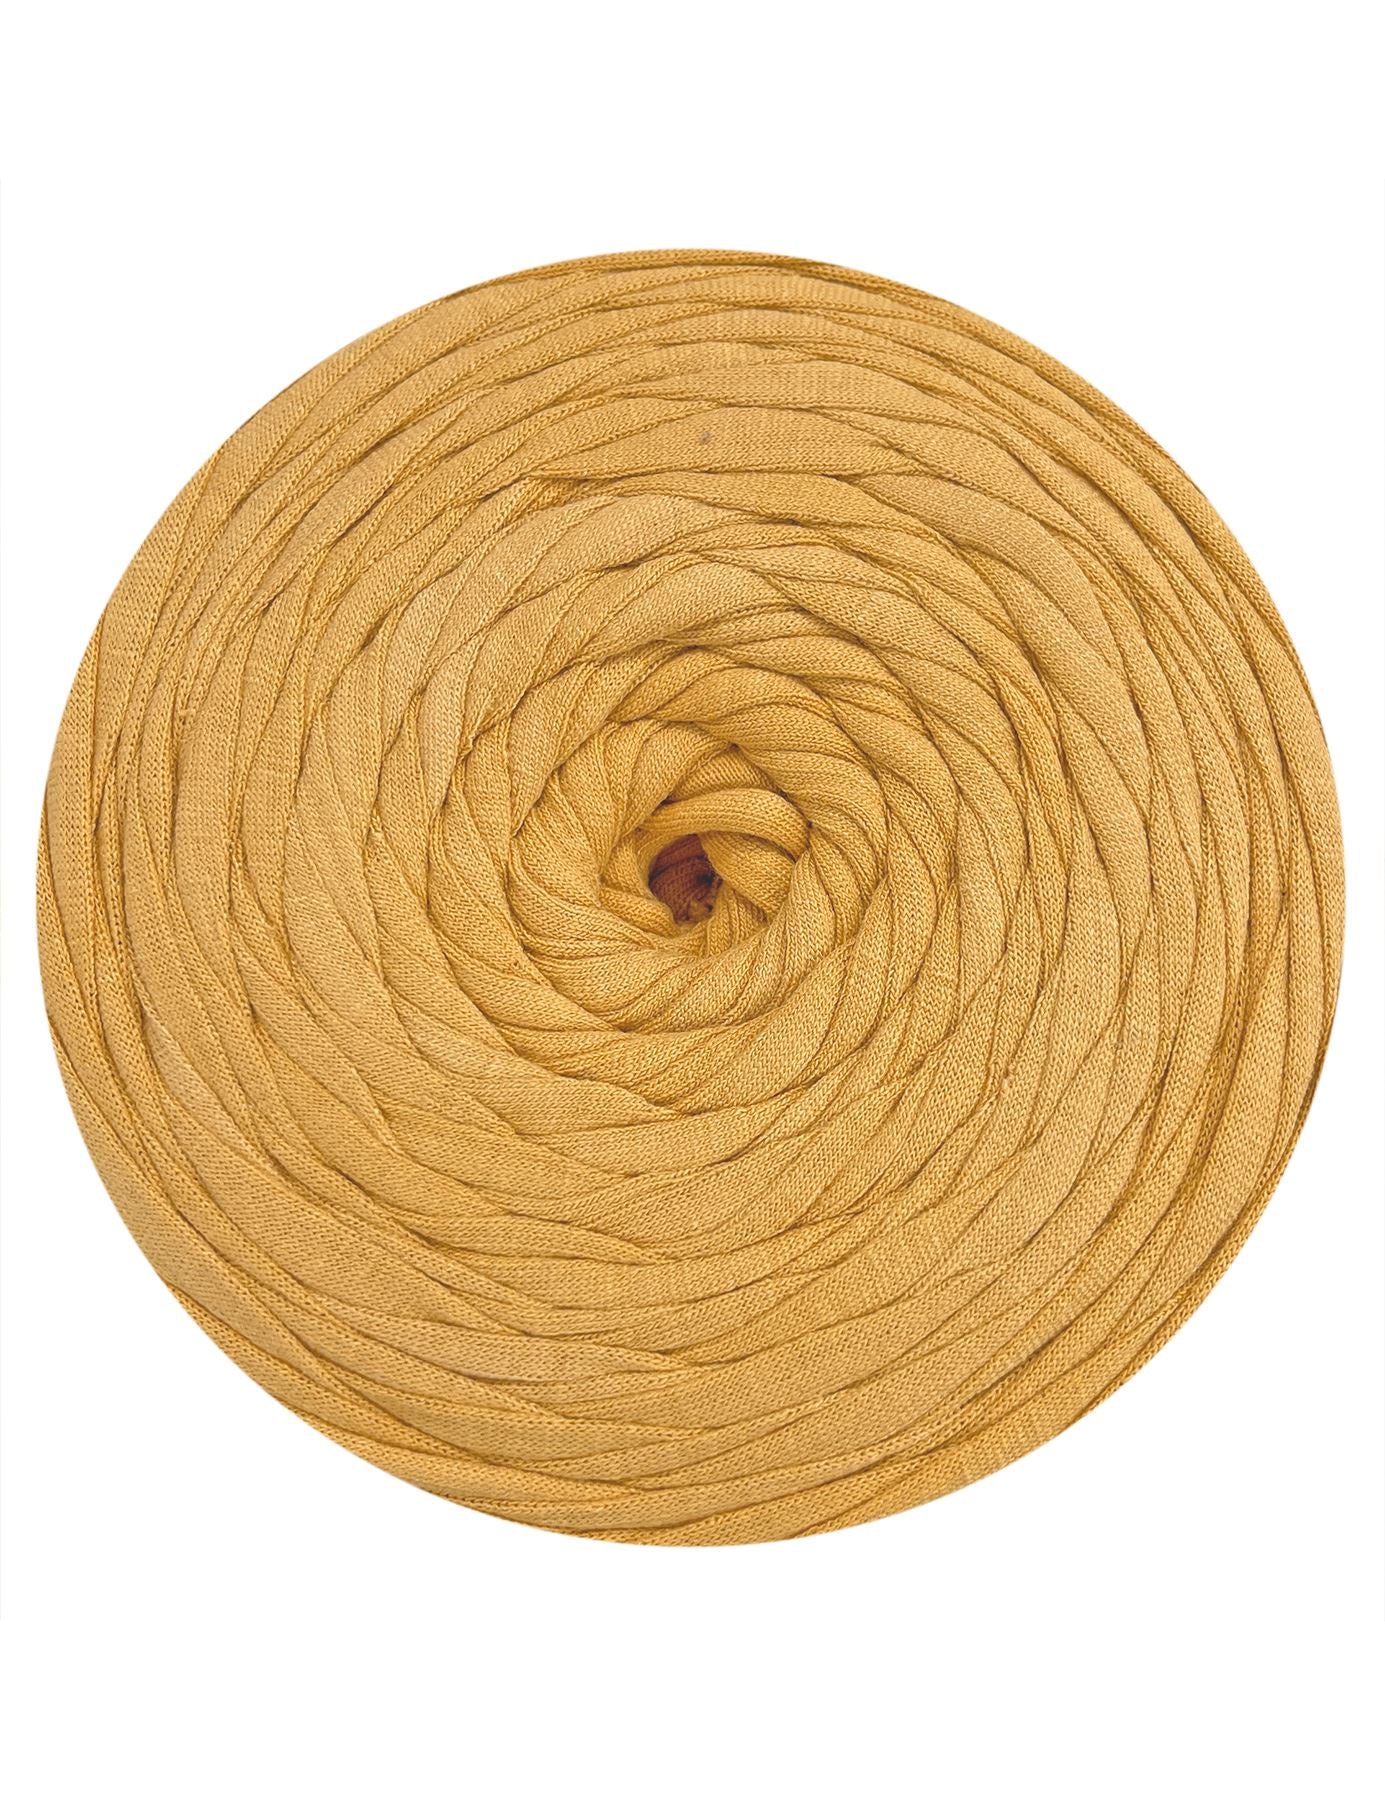 Mustard yellow t-shirt yarn (100-120m)